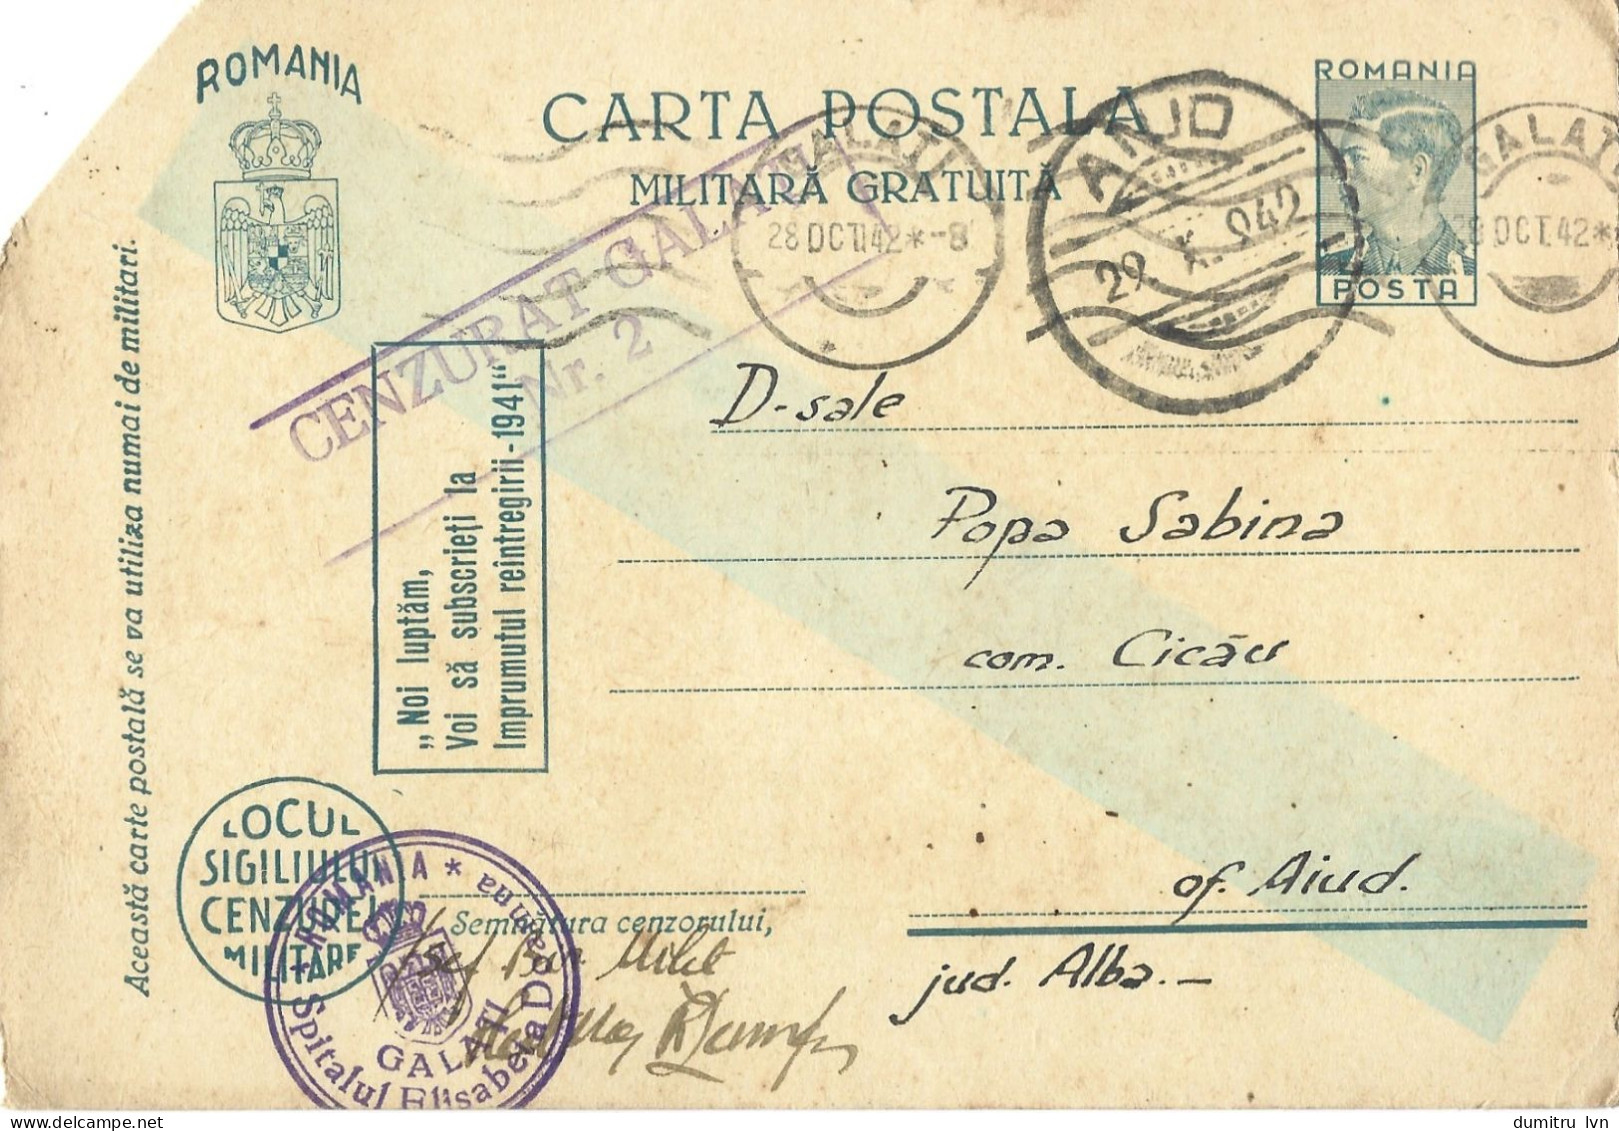 ROMANIA 1942 FREE MILITARY POSTCARD, CENSORED GALATI Nr.2, SPITALUL ELISABETA DOAMNA STAMP, POSTCARD STATIONERY - Cartas De La Segunda Guerra Mundial